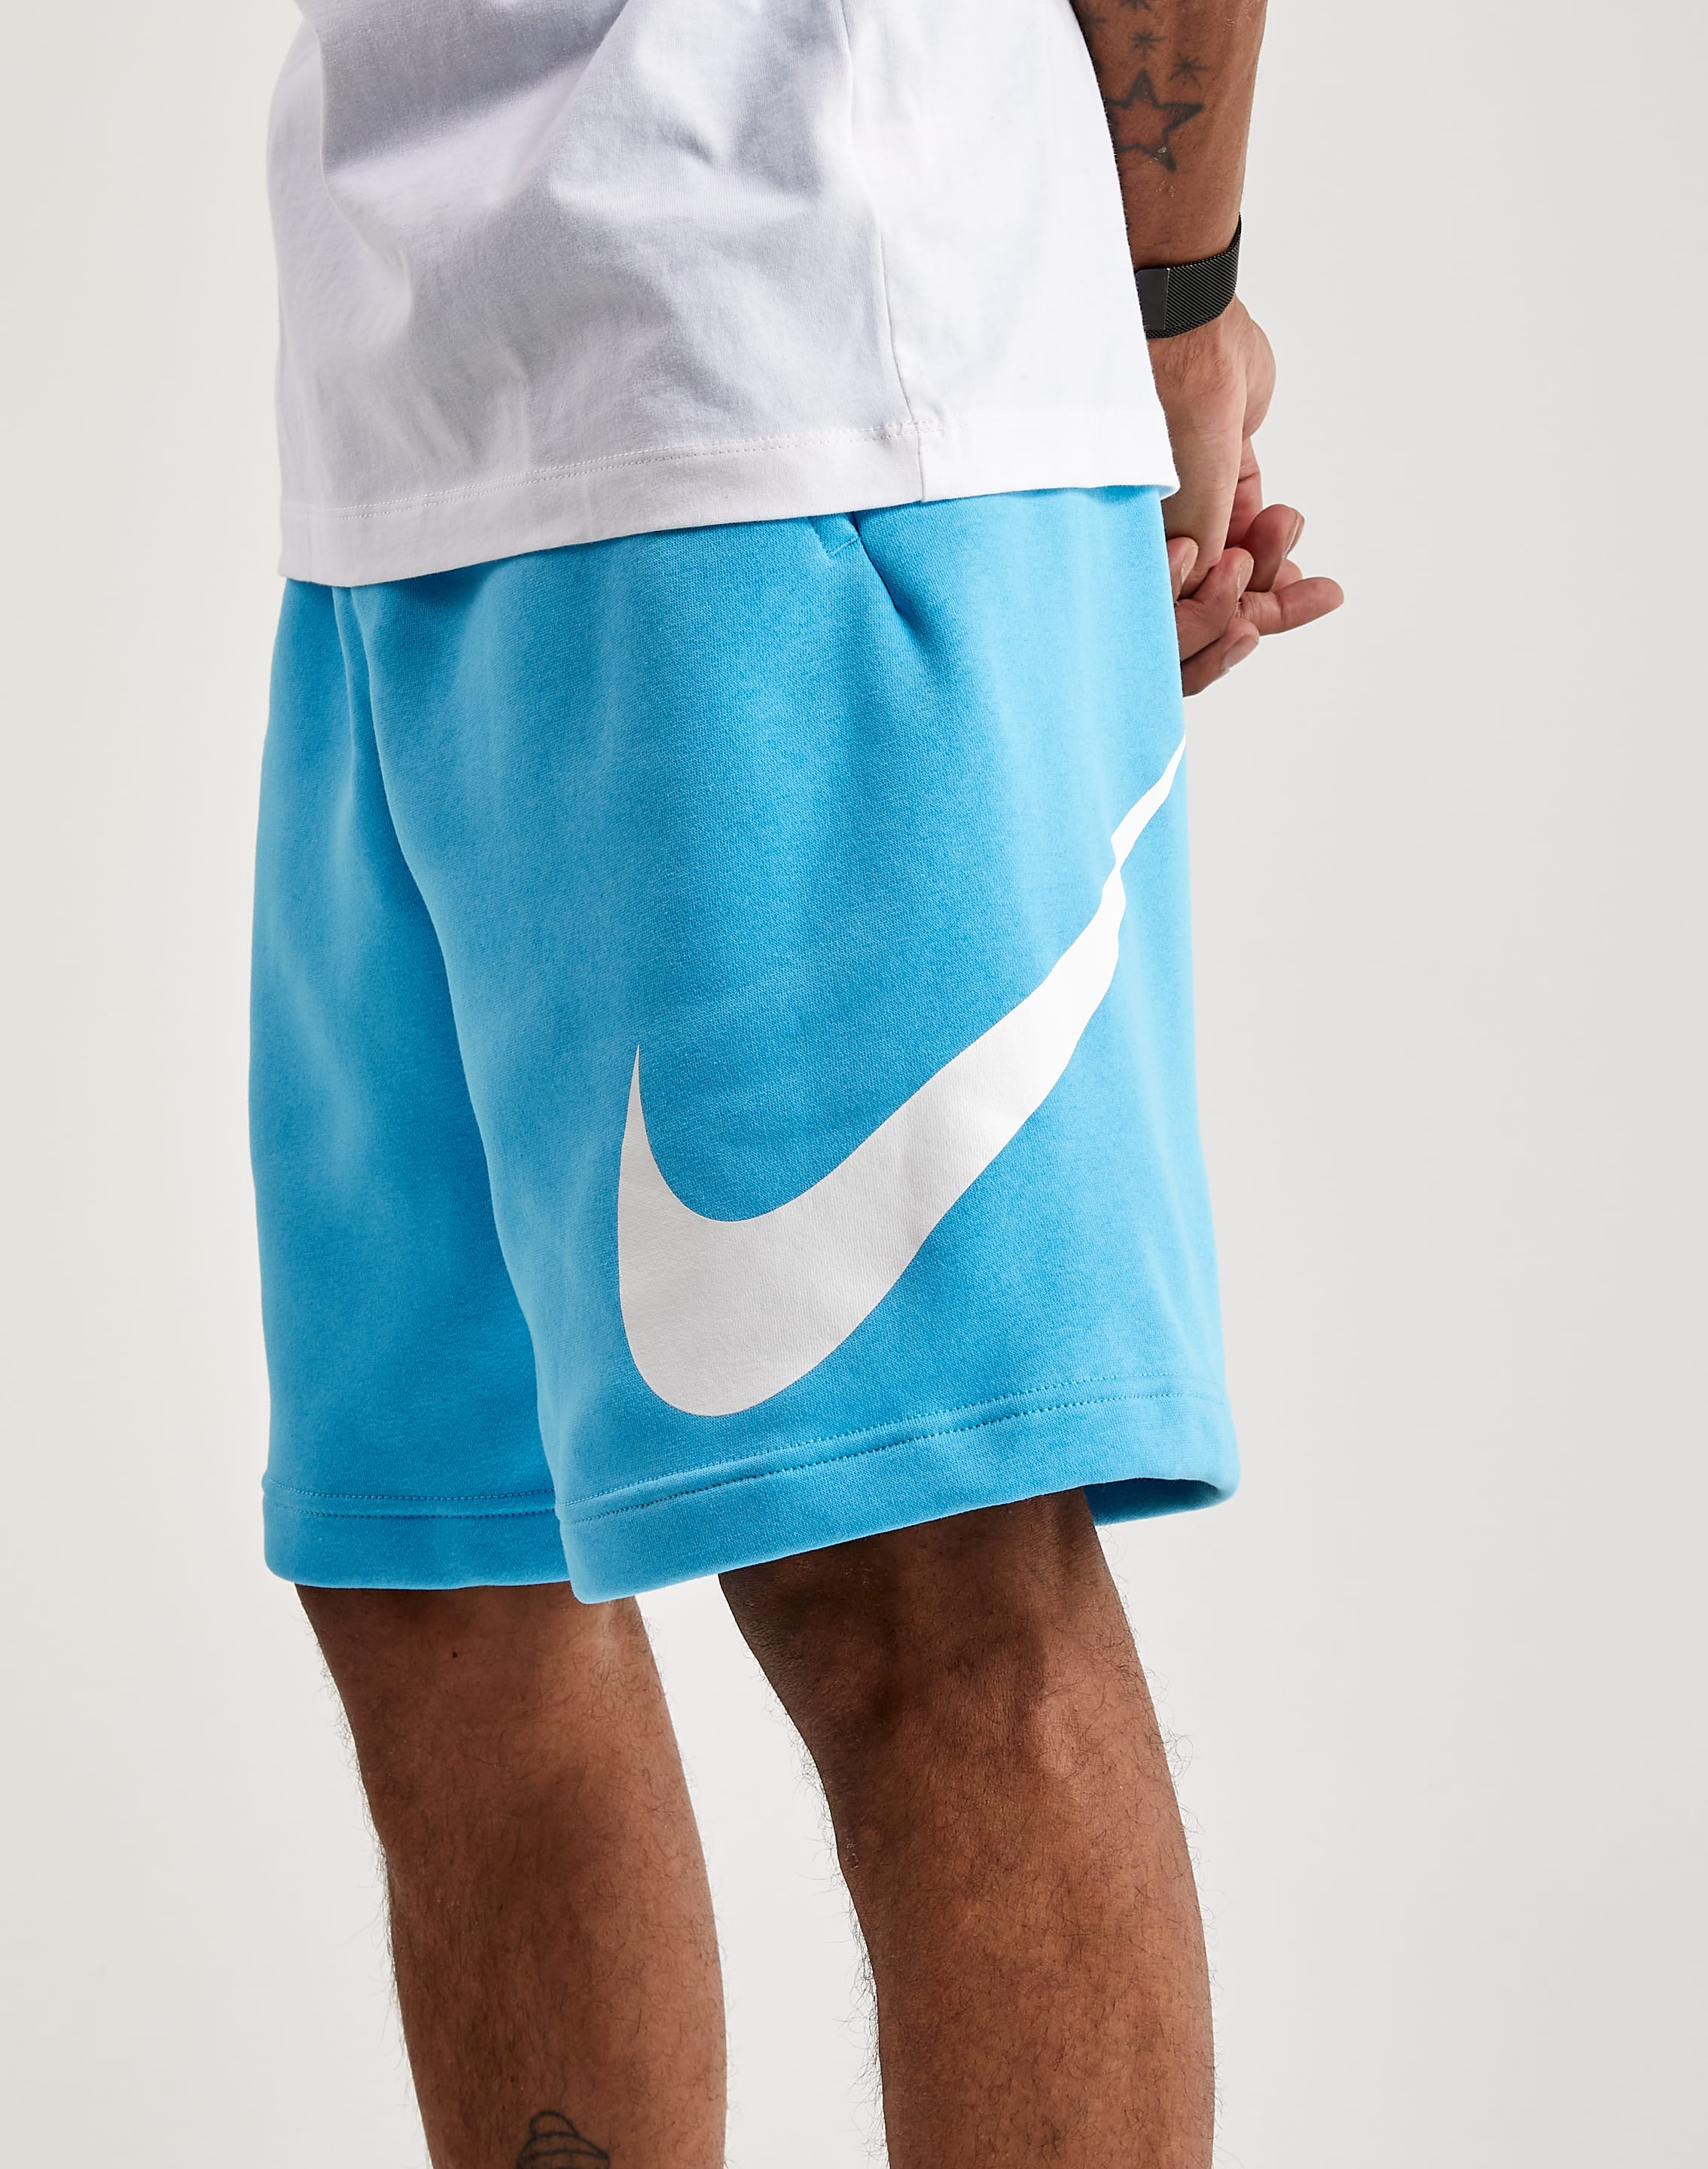 Nike Dri-Fit Basketball Shorts – DTLR